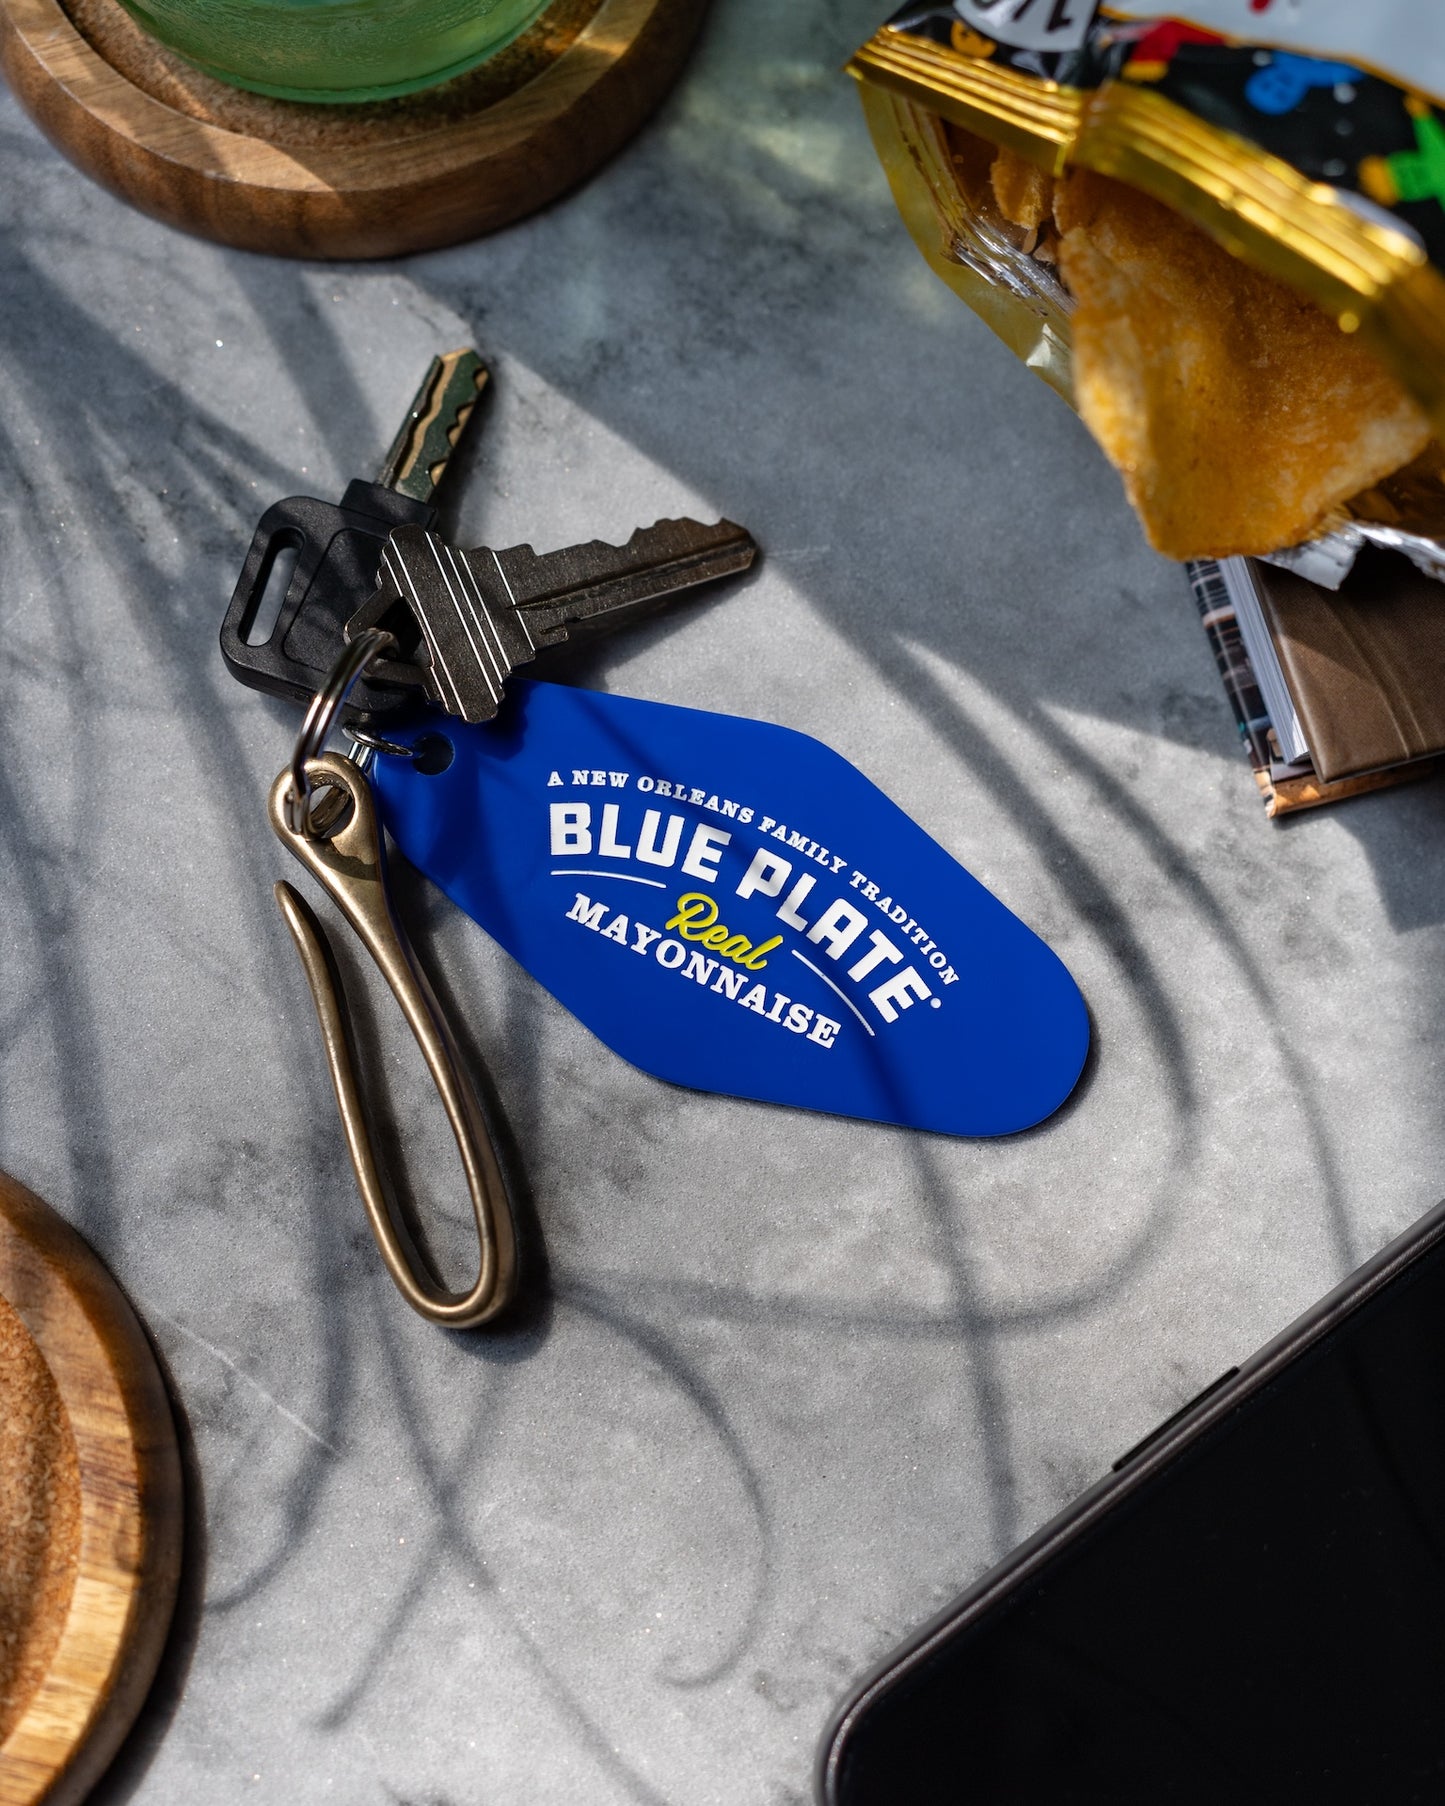 Blue Plate® Motel Keychain